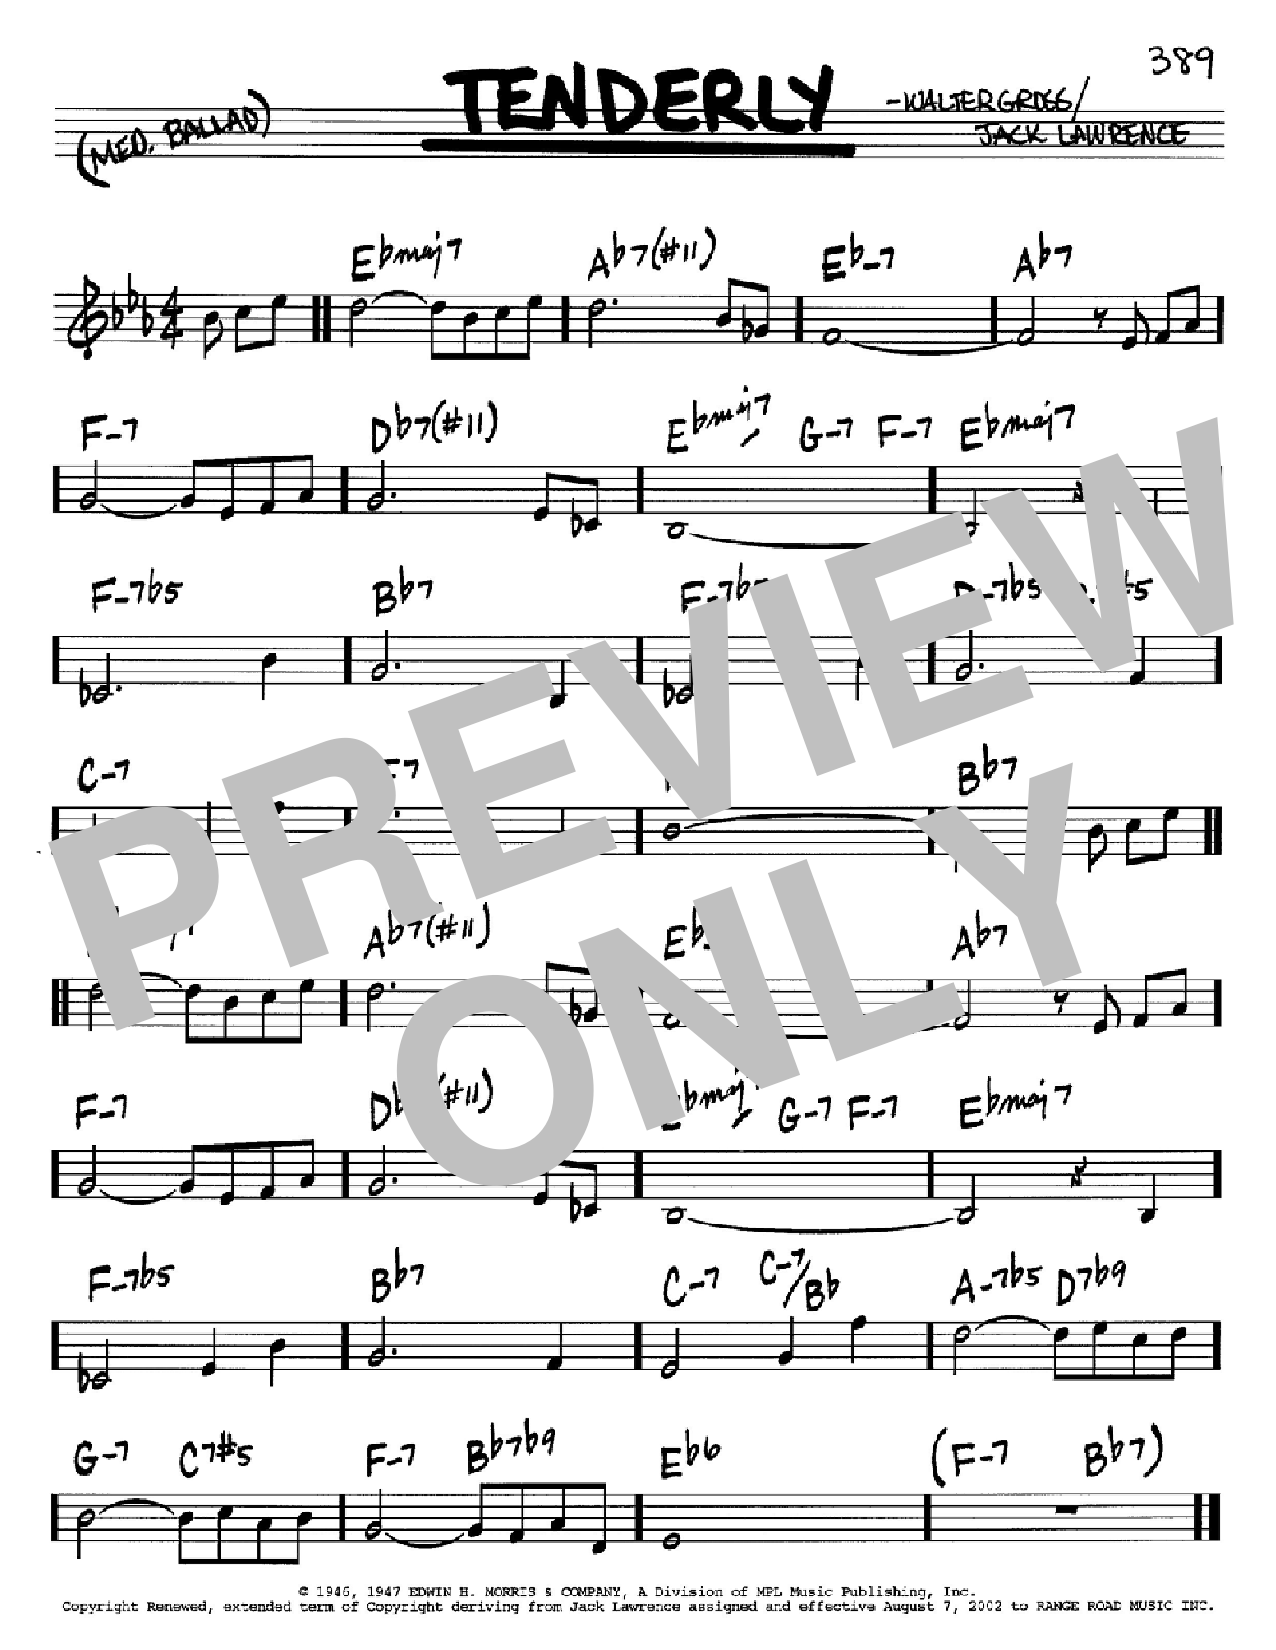 Jack Lawrence Tenderly sheet music notes and chords arranged for Easy Ukulele Tab